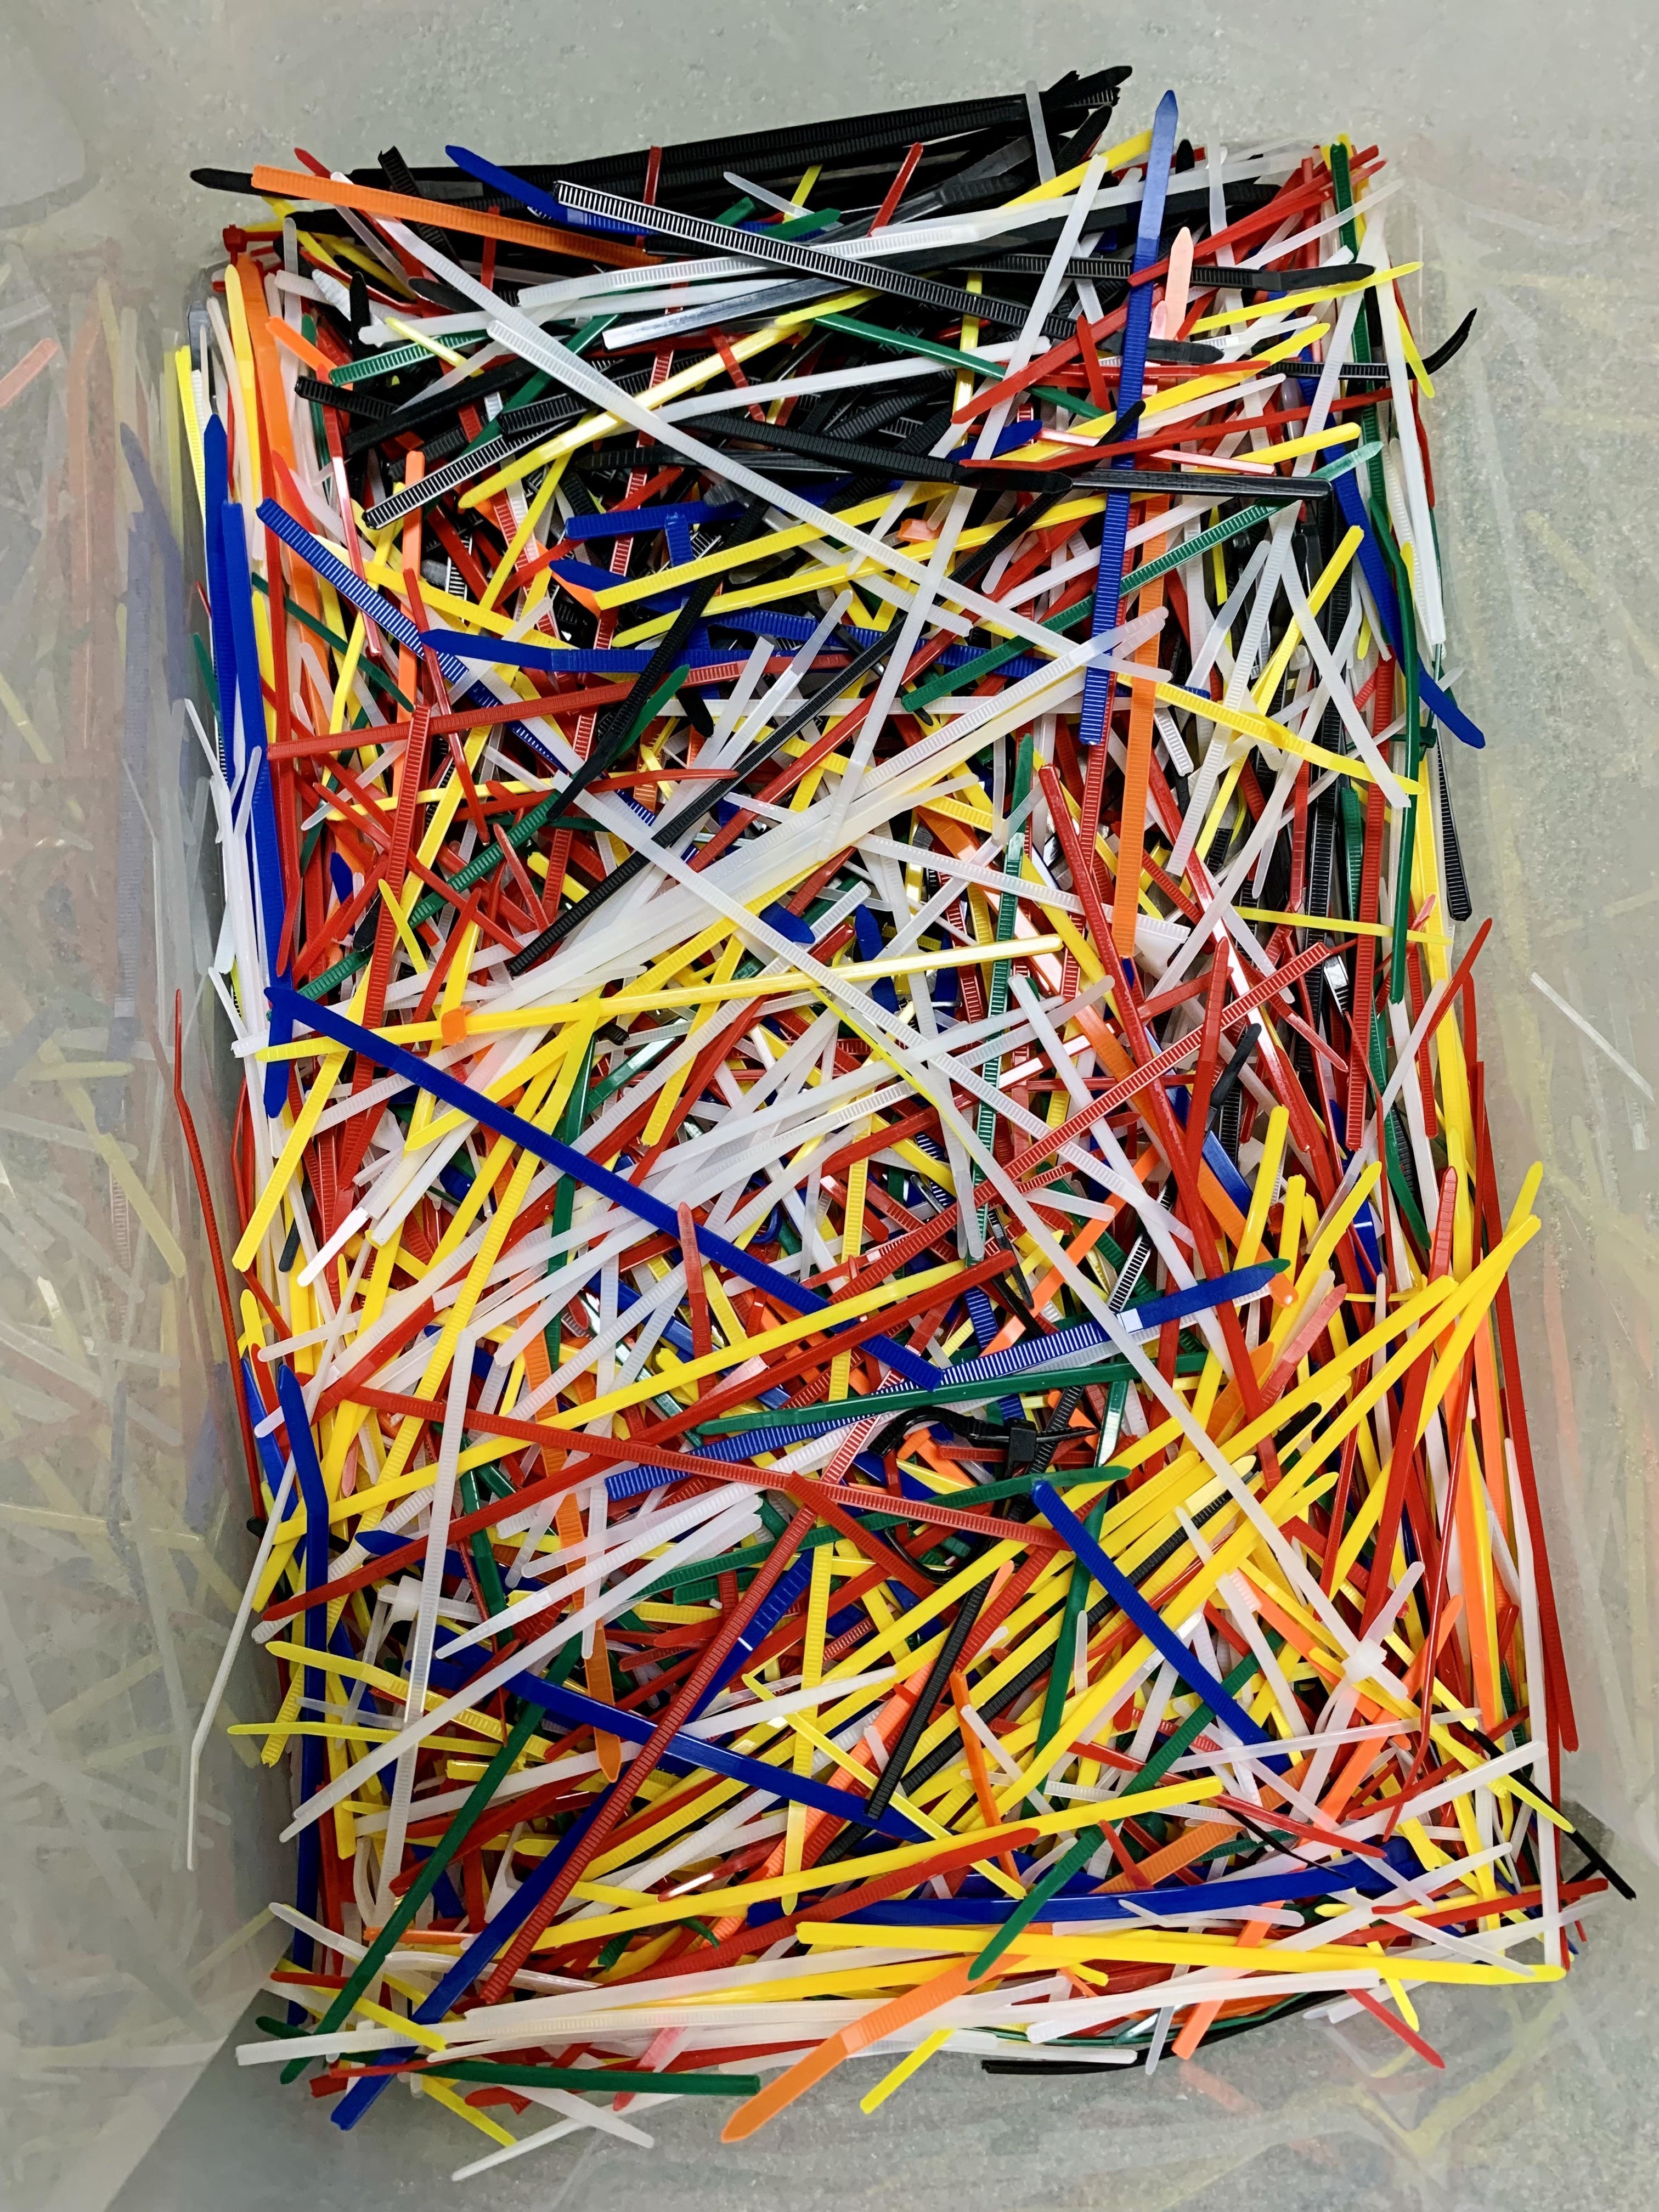 A plastic bin full of colorful plastic zip ties